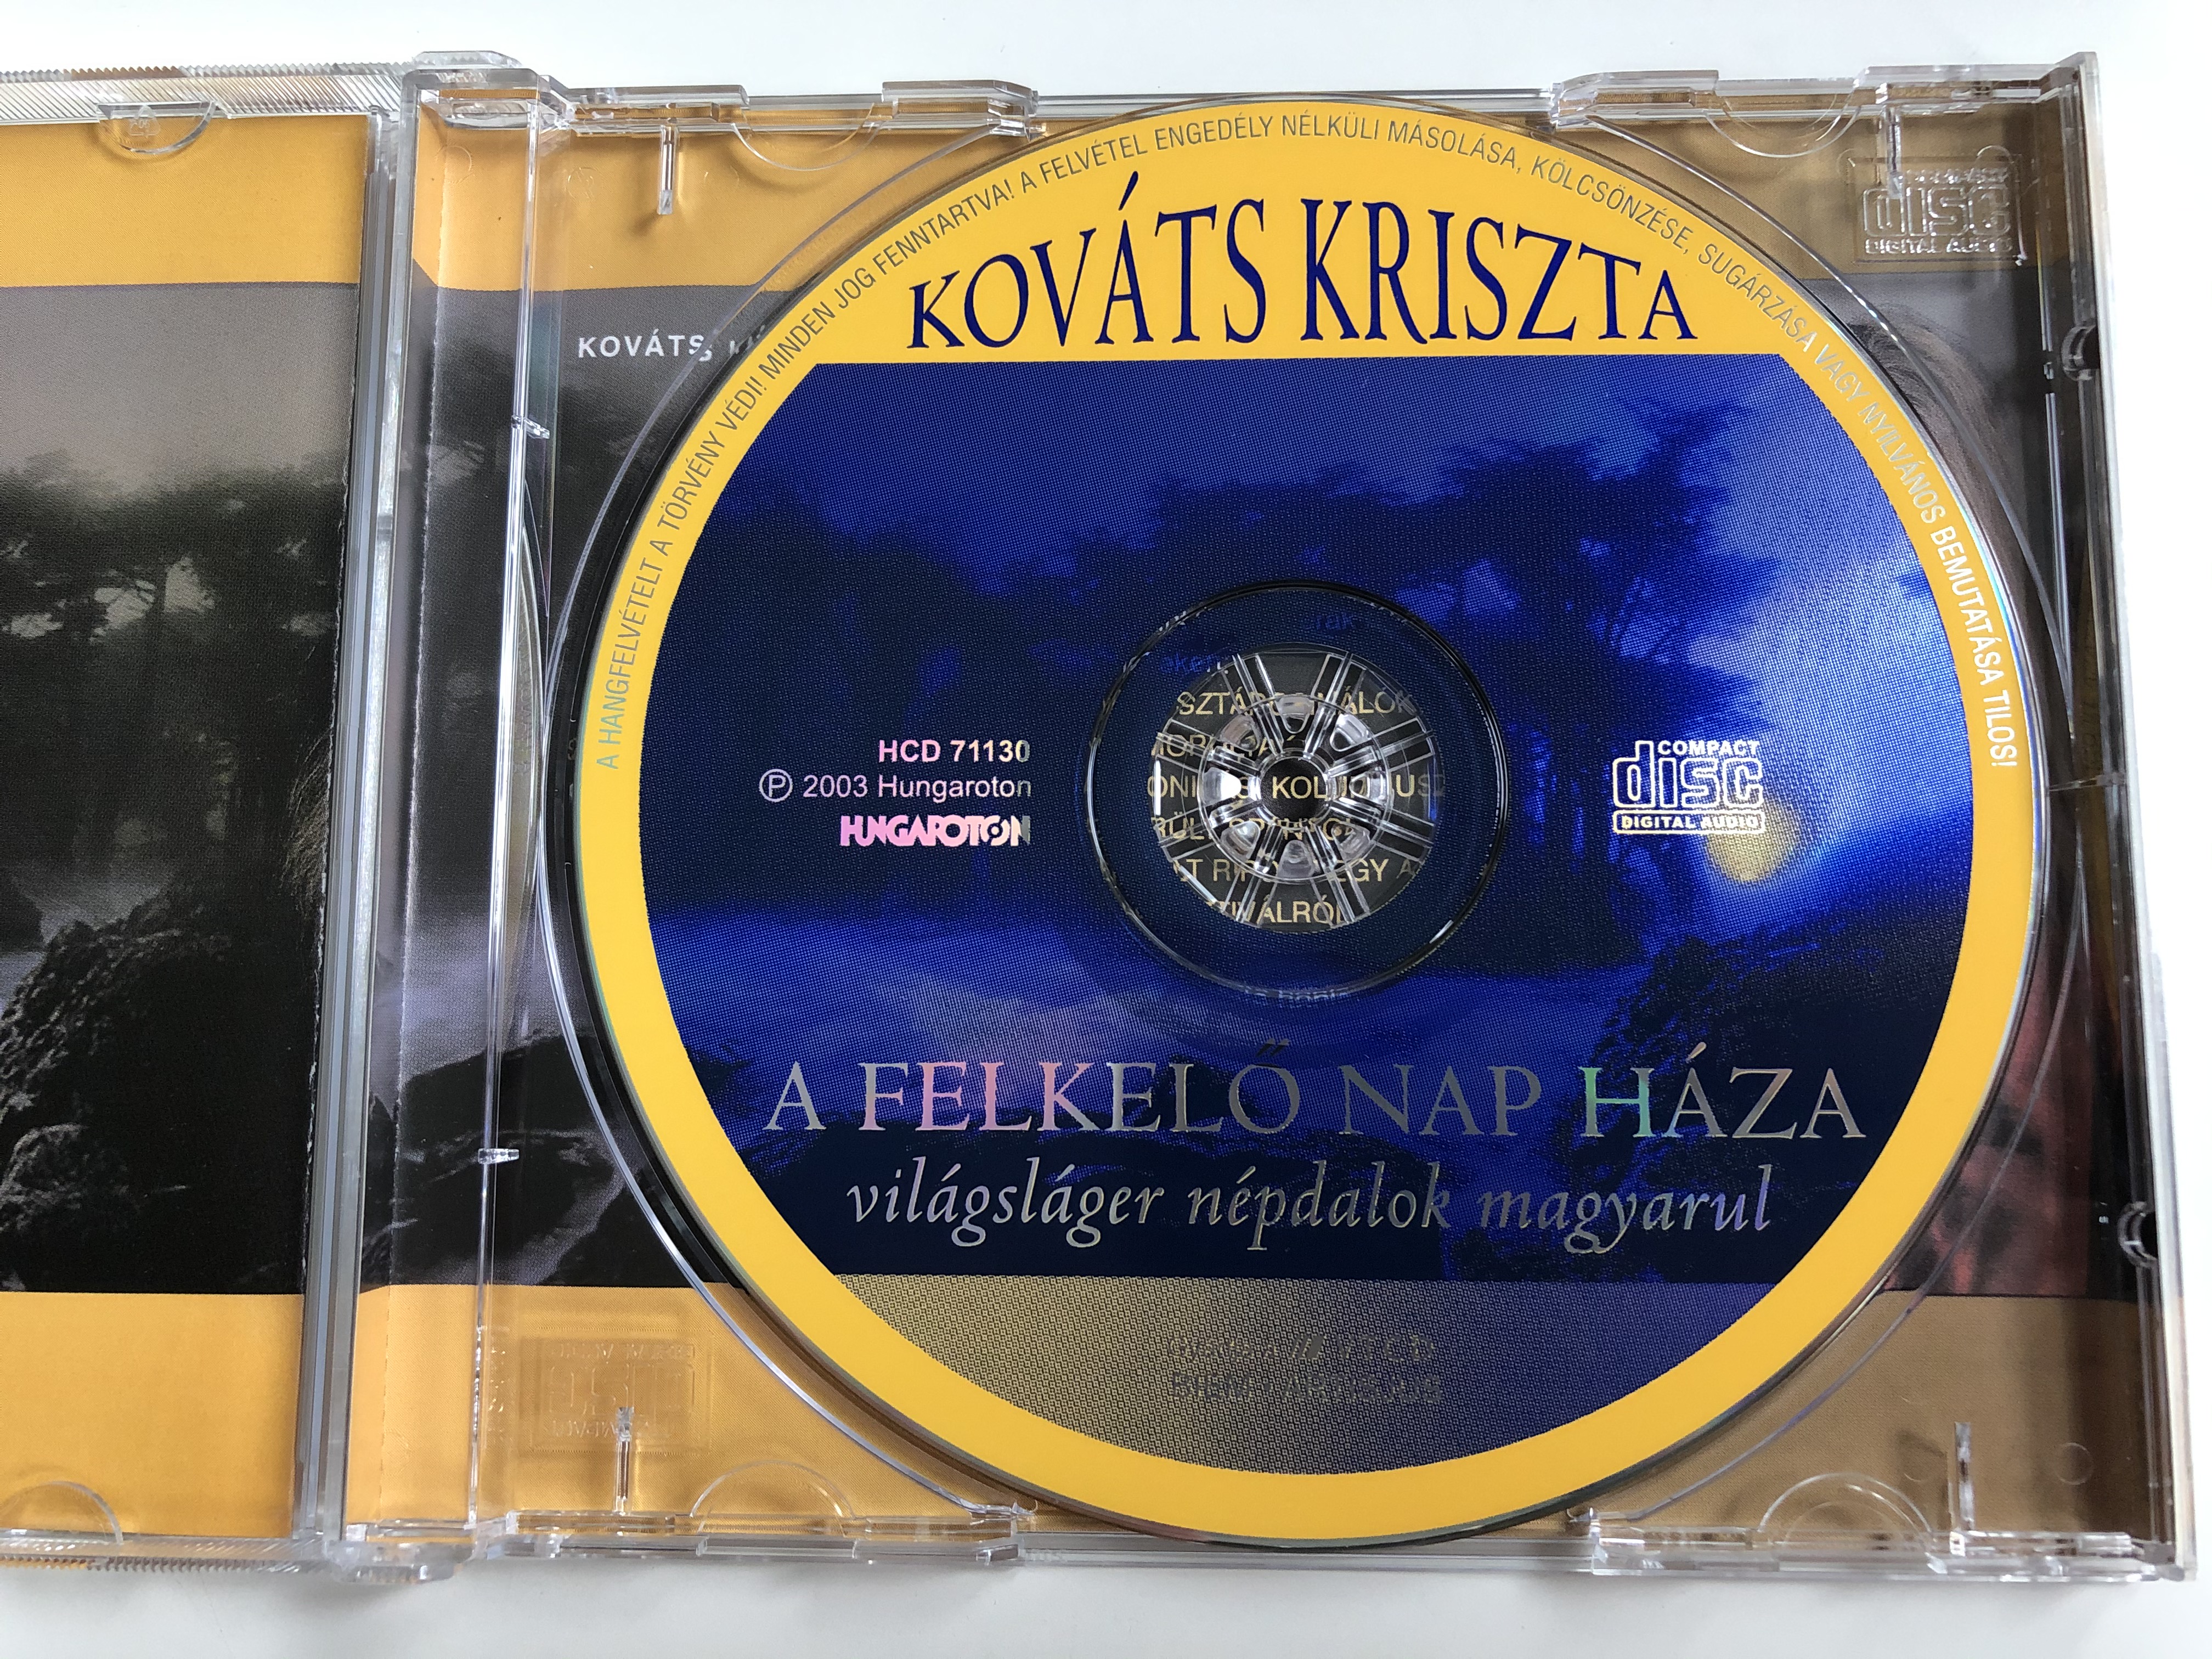 kov-ts-kriszta-a-felkel-nap-h-za-vil-gsl-gerek-n-pdalok-magyarul-hungaroton-audio-cd-2003-hcd-71130-4-.jpg